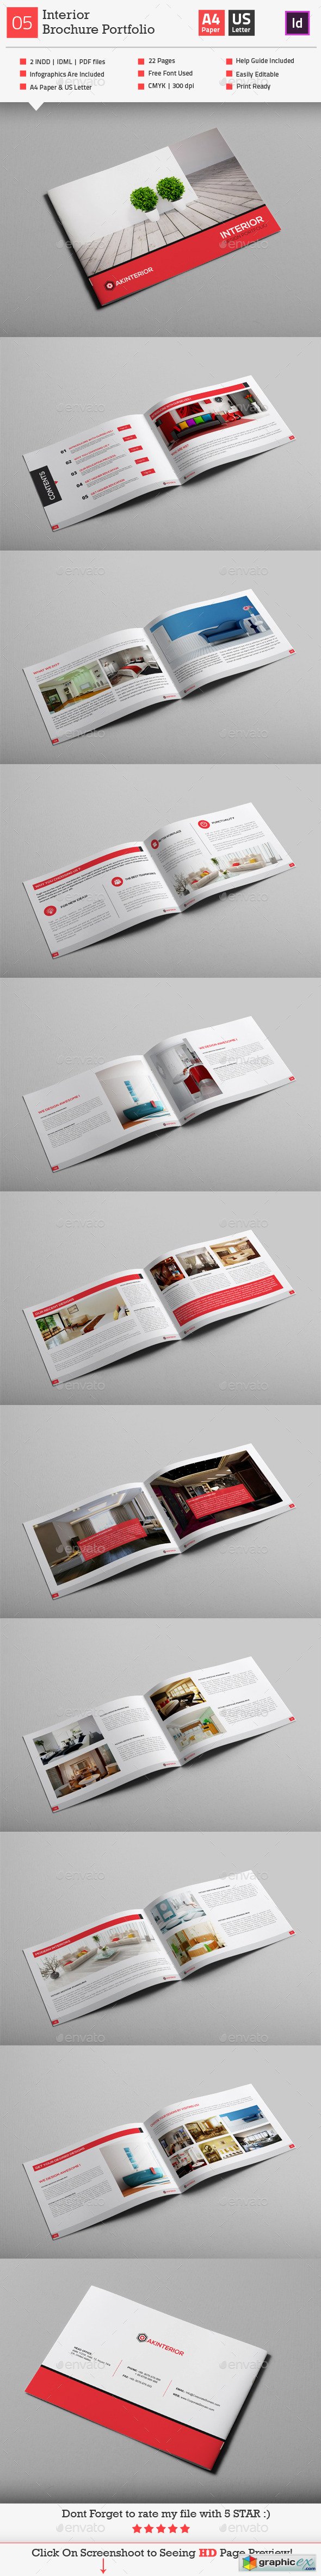 Interior Brochure Template Portfolio